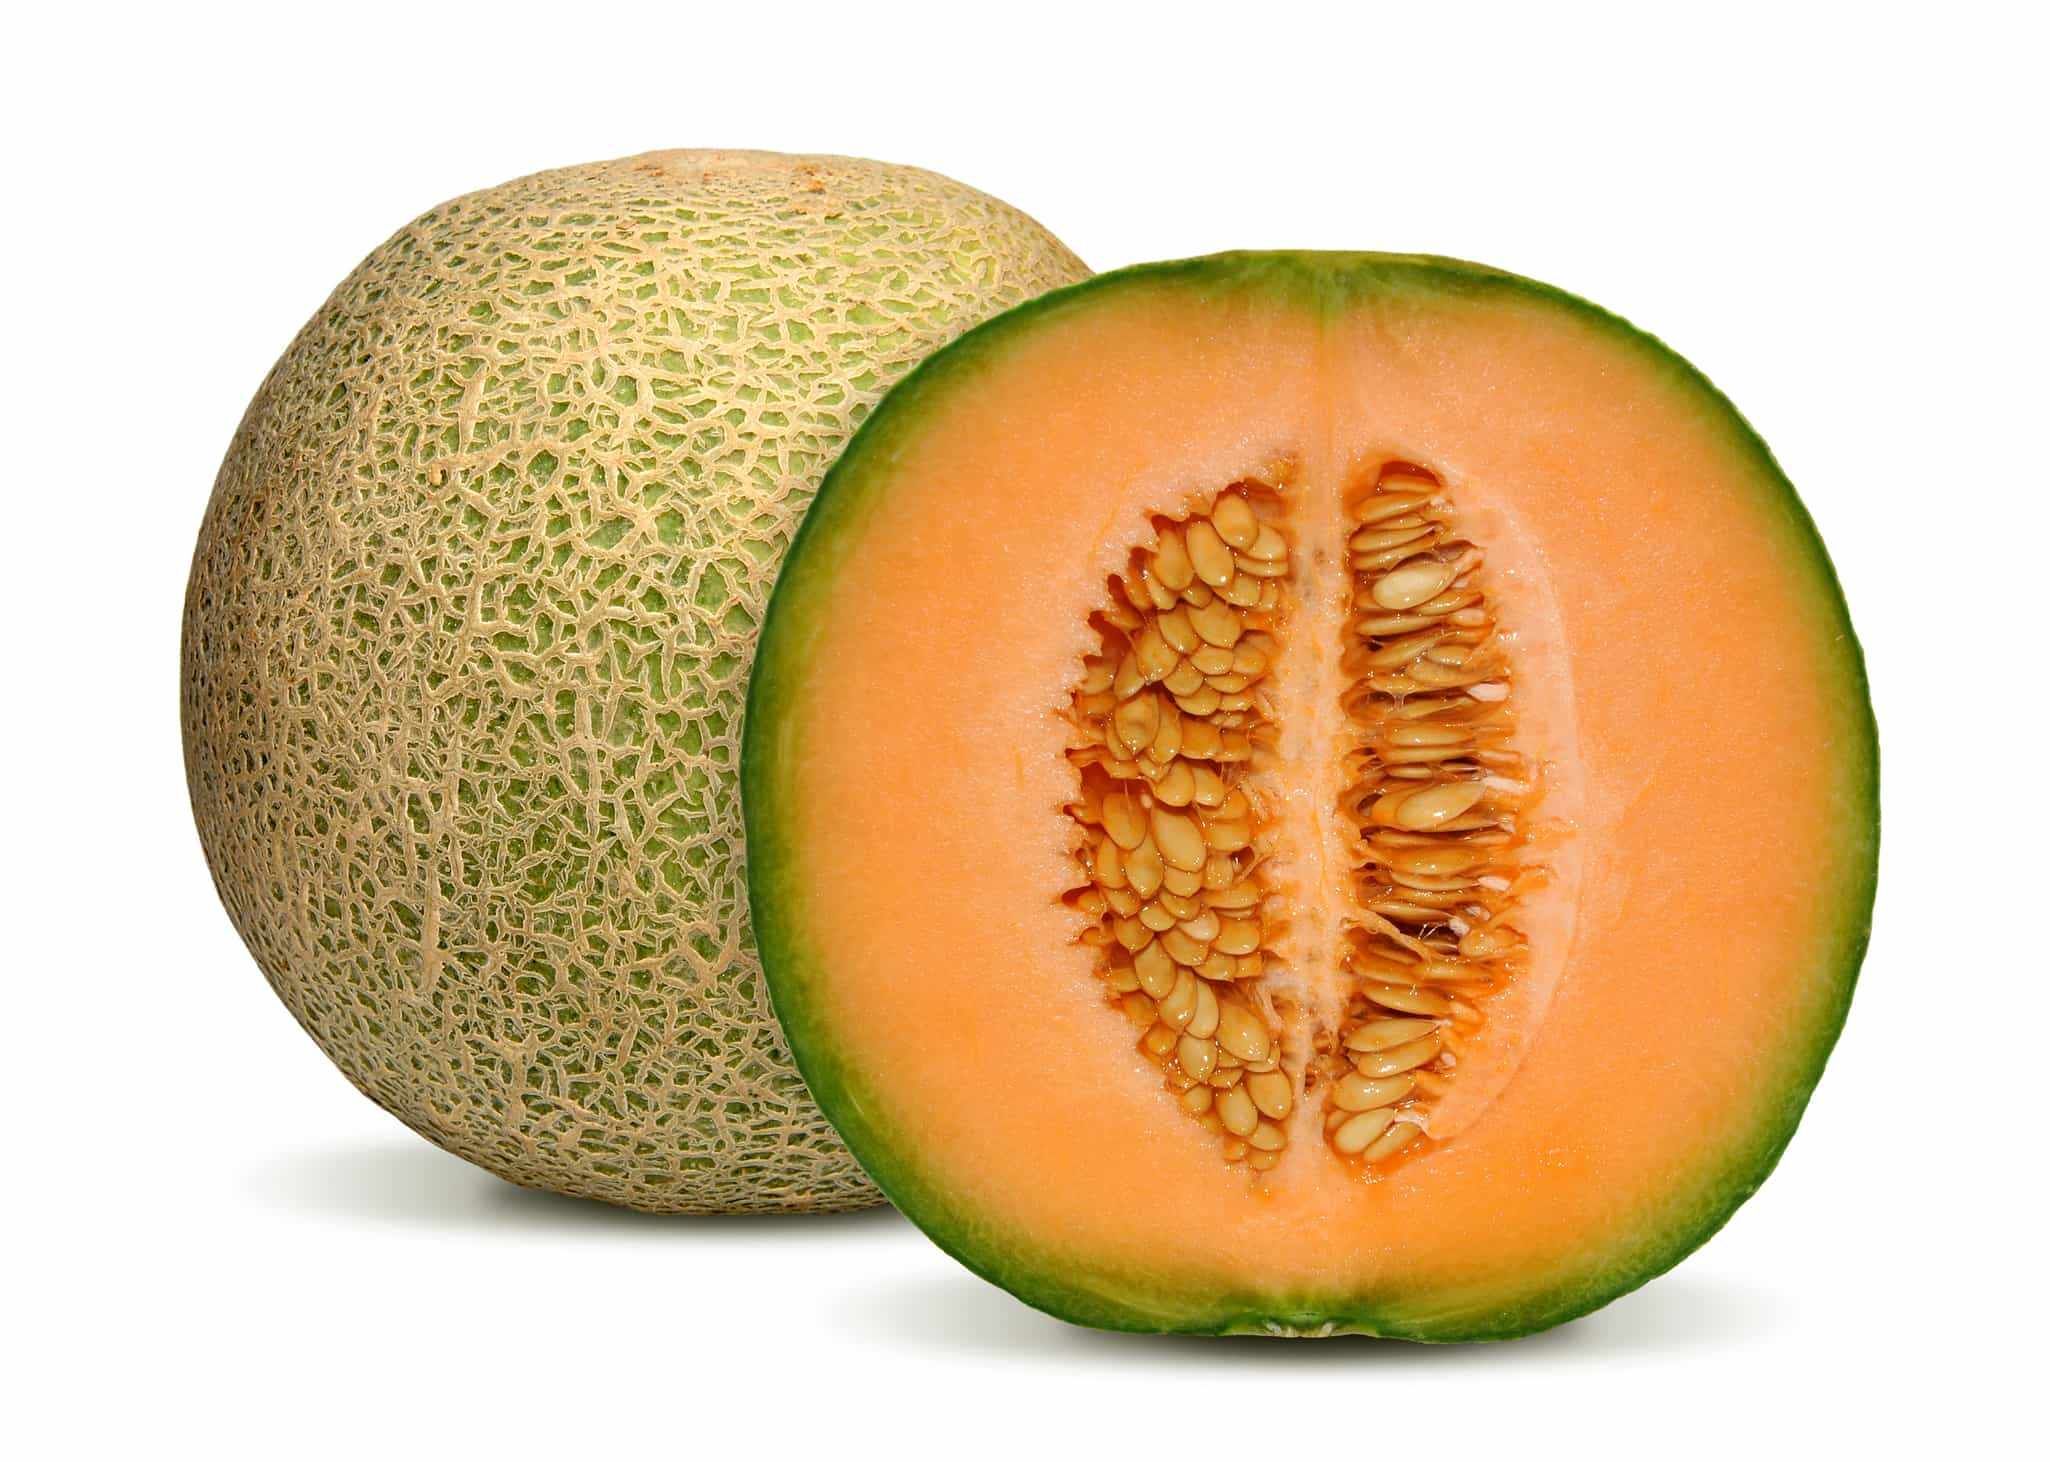 Melon Cantaloupe  green c1000g-1200g/per Piece. Price of Piece- Brazil